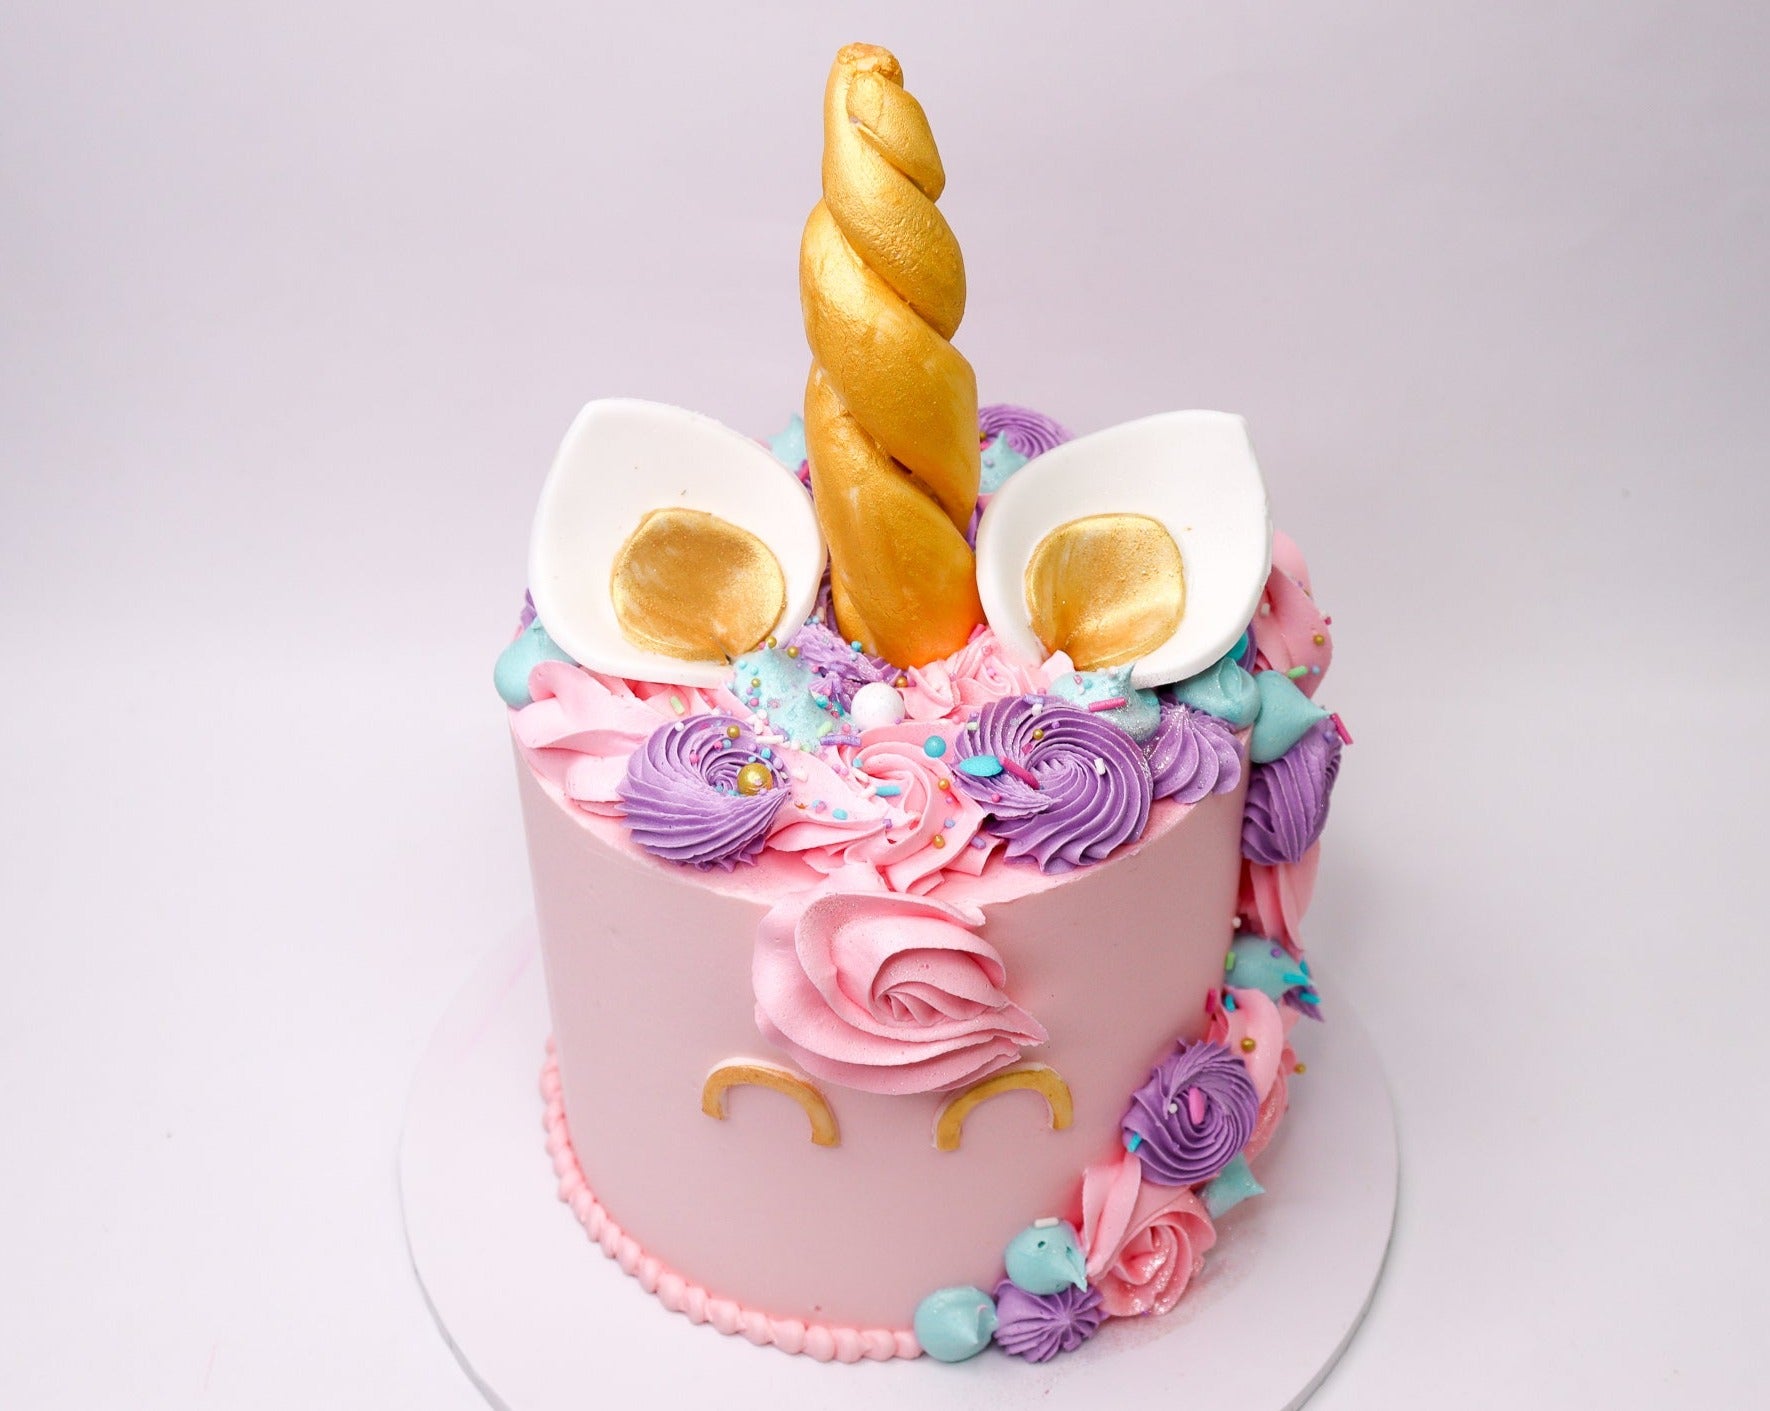 With love, Unicorn my creation for @thedessertstory #unicorncakes # unicorncake | Kuchen und torten, Kuchen und torten rezepte, Süße kuchen